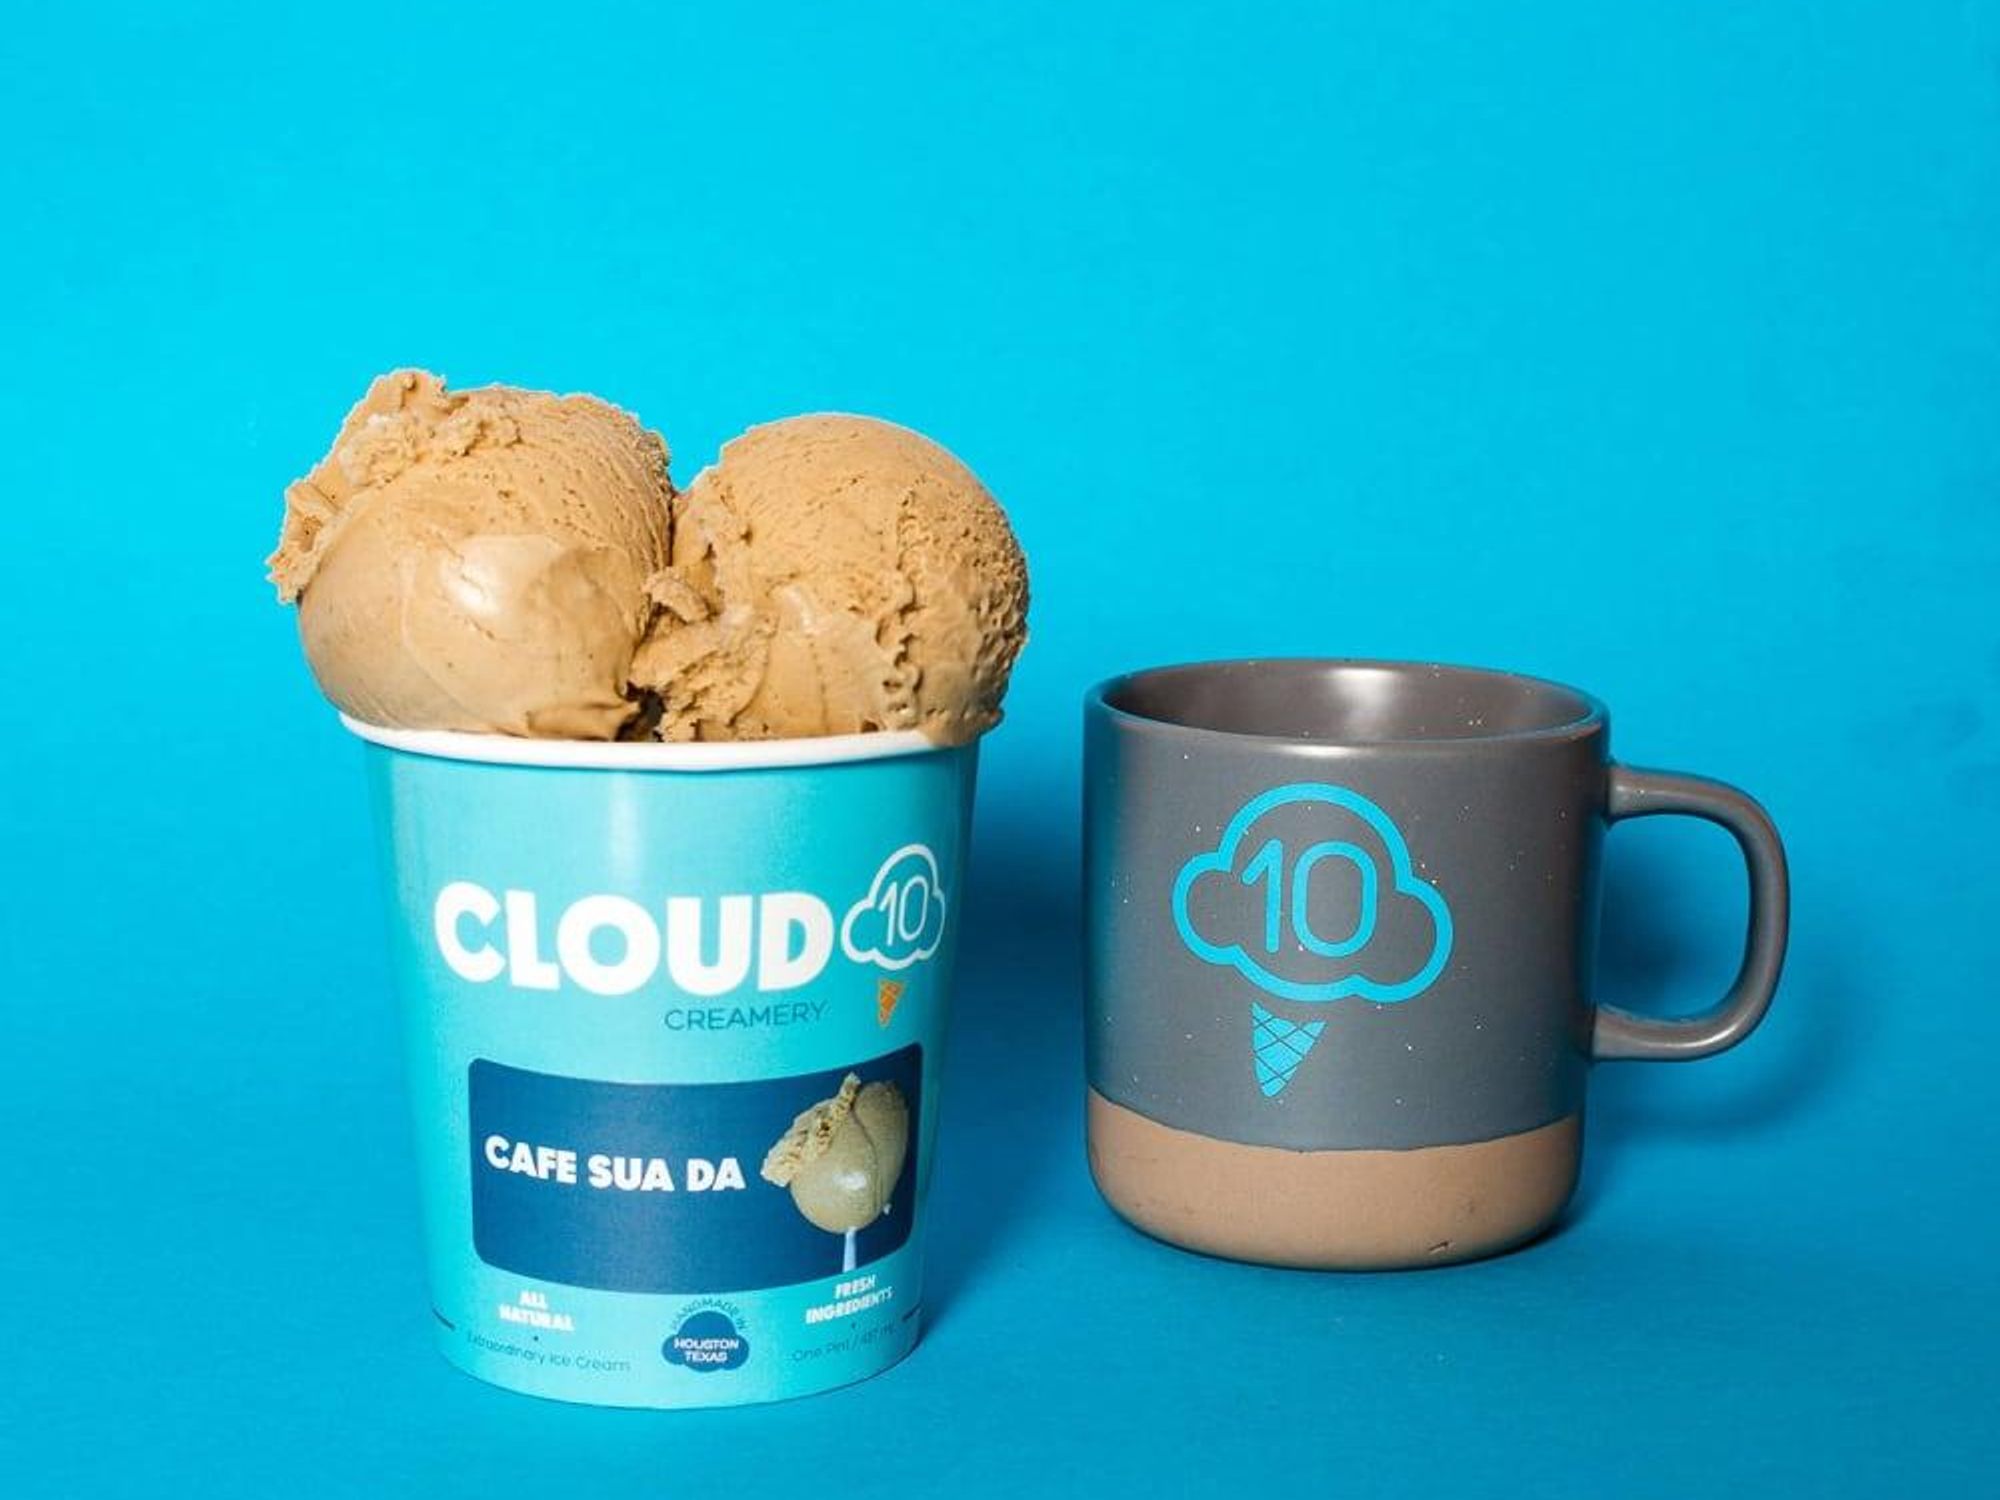 Cloud 10 Creamery cafe sua da pint